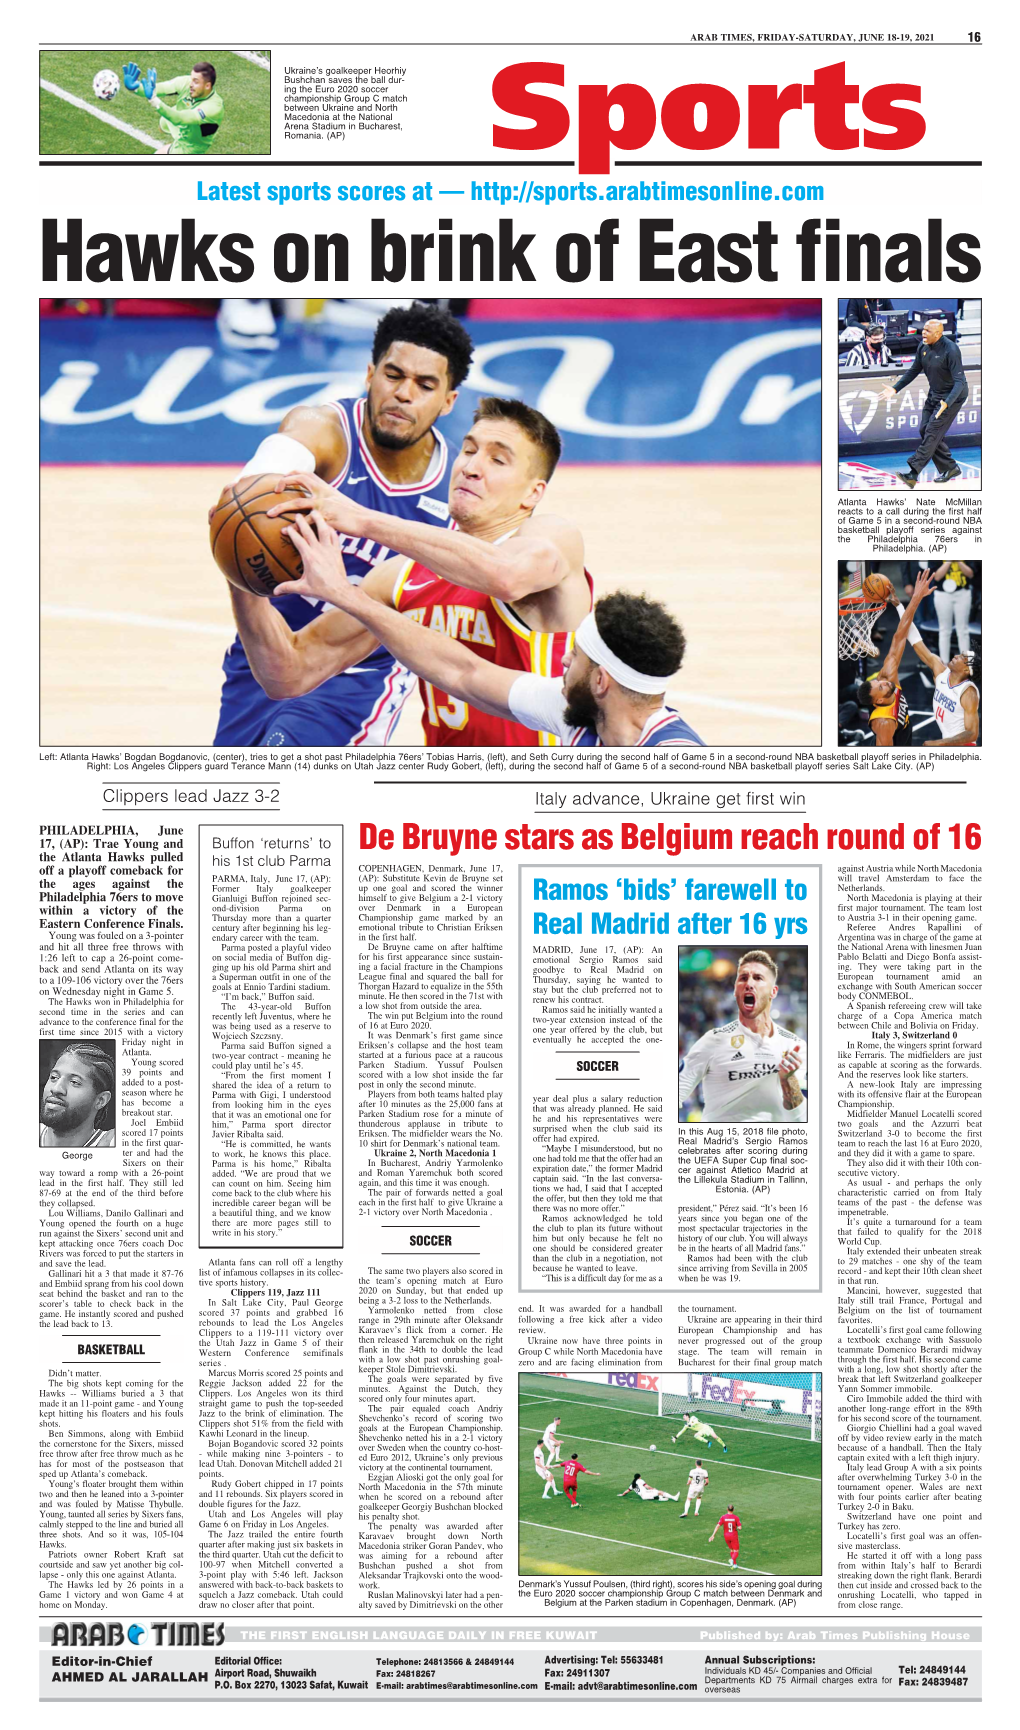 De Bruyne Stars As Belgium Reach Round of 16